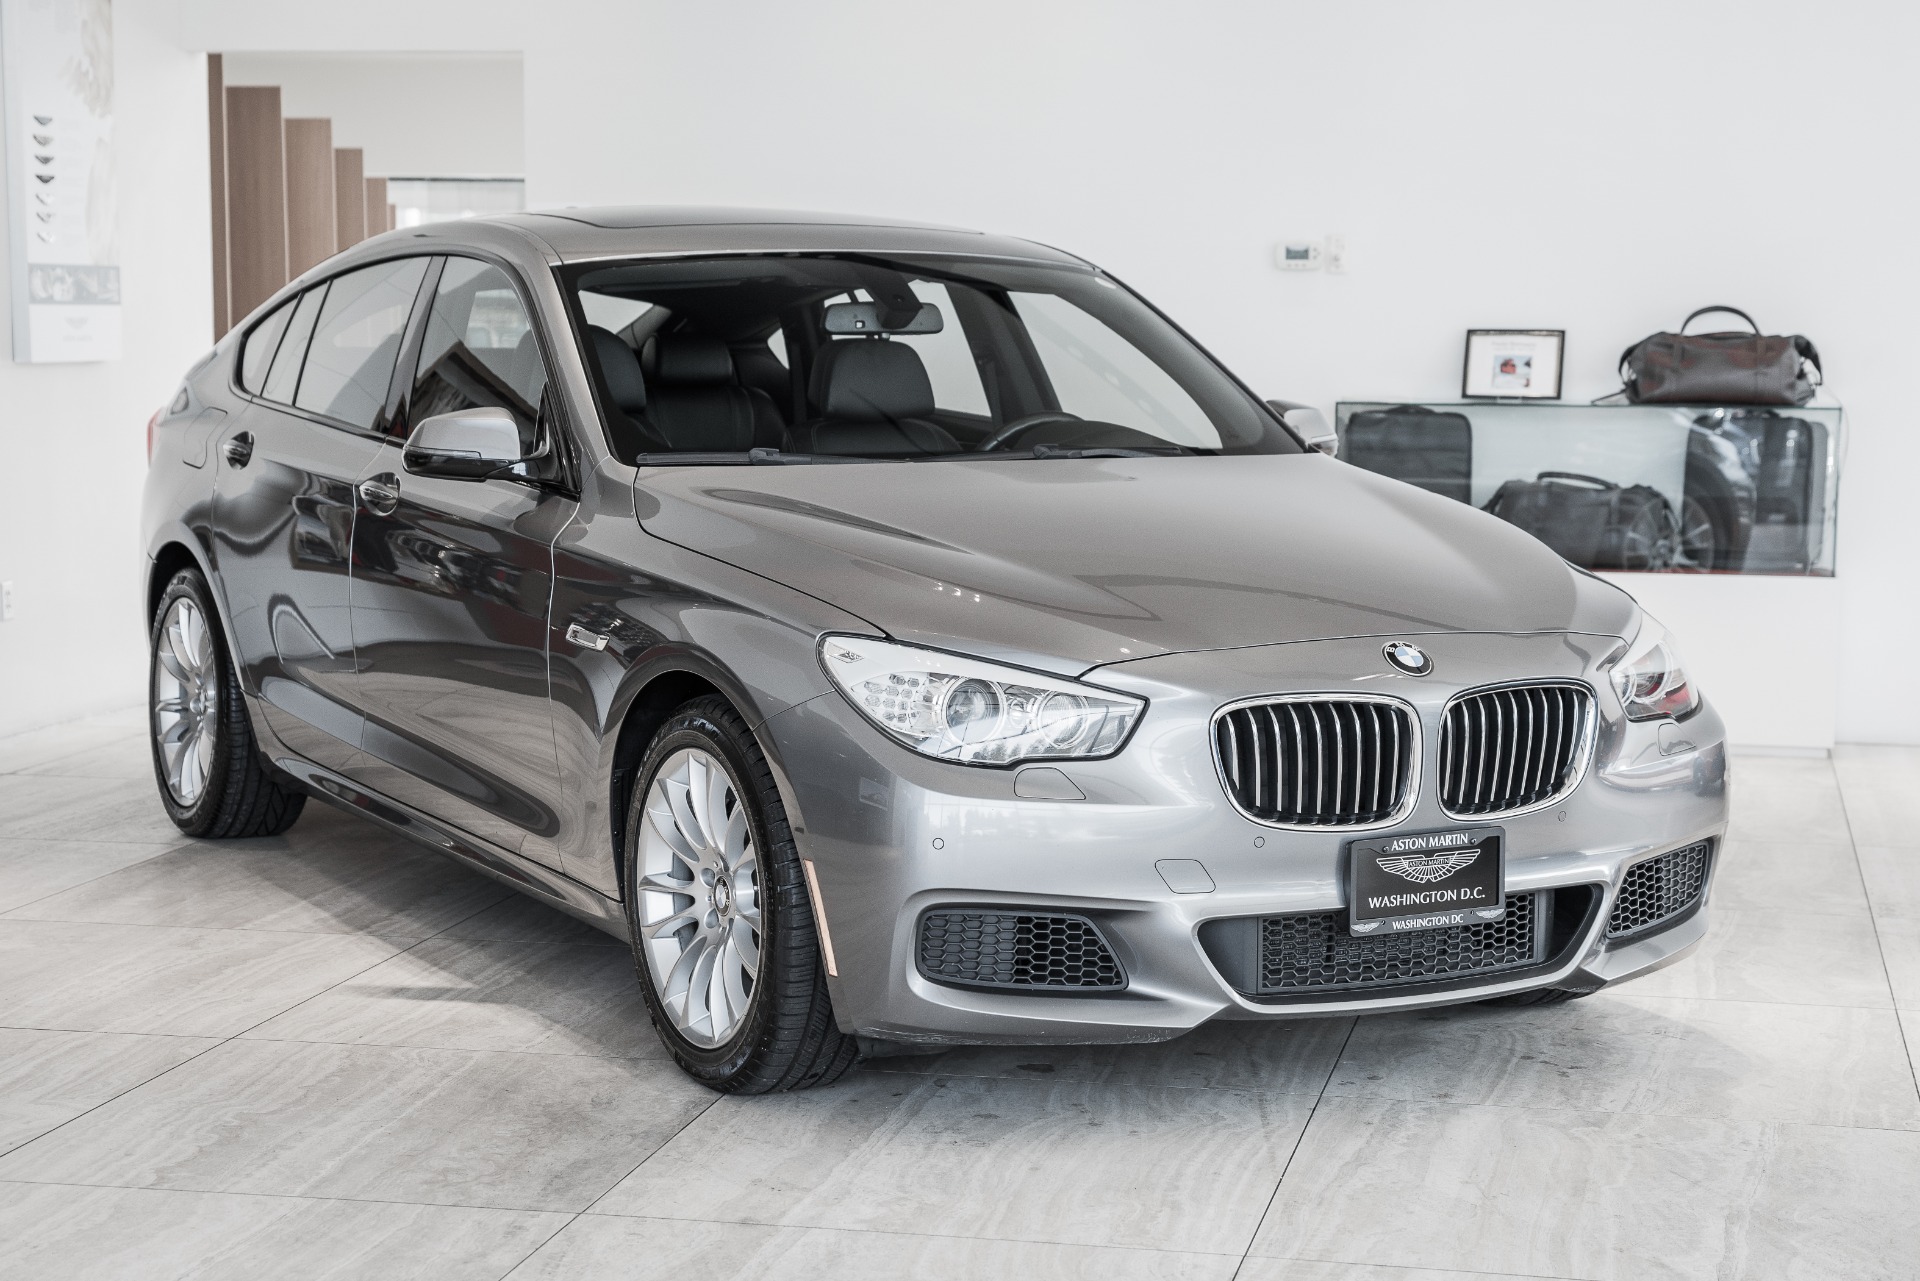 BMW 520 Titanium Silver Colour 2017 